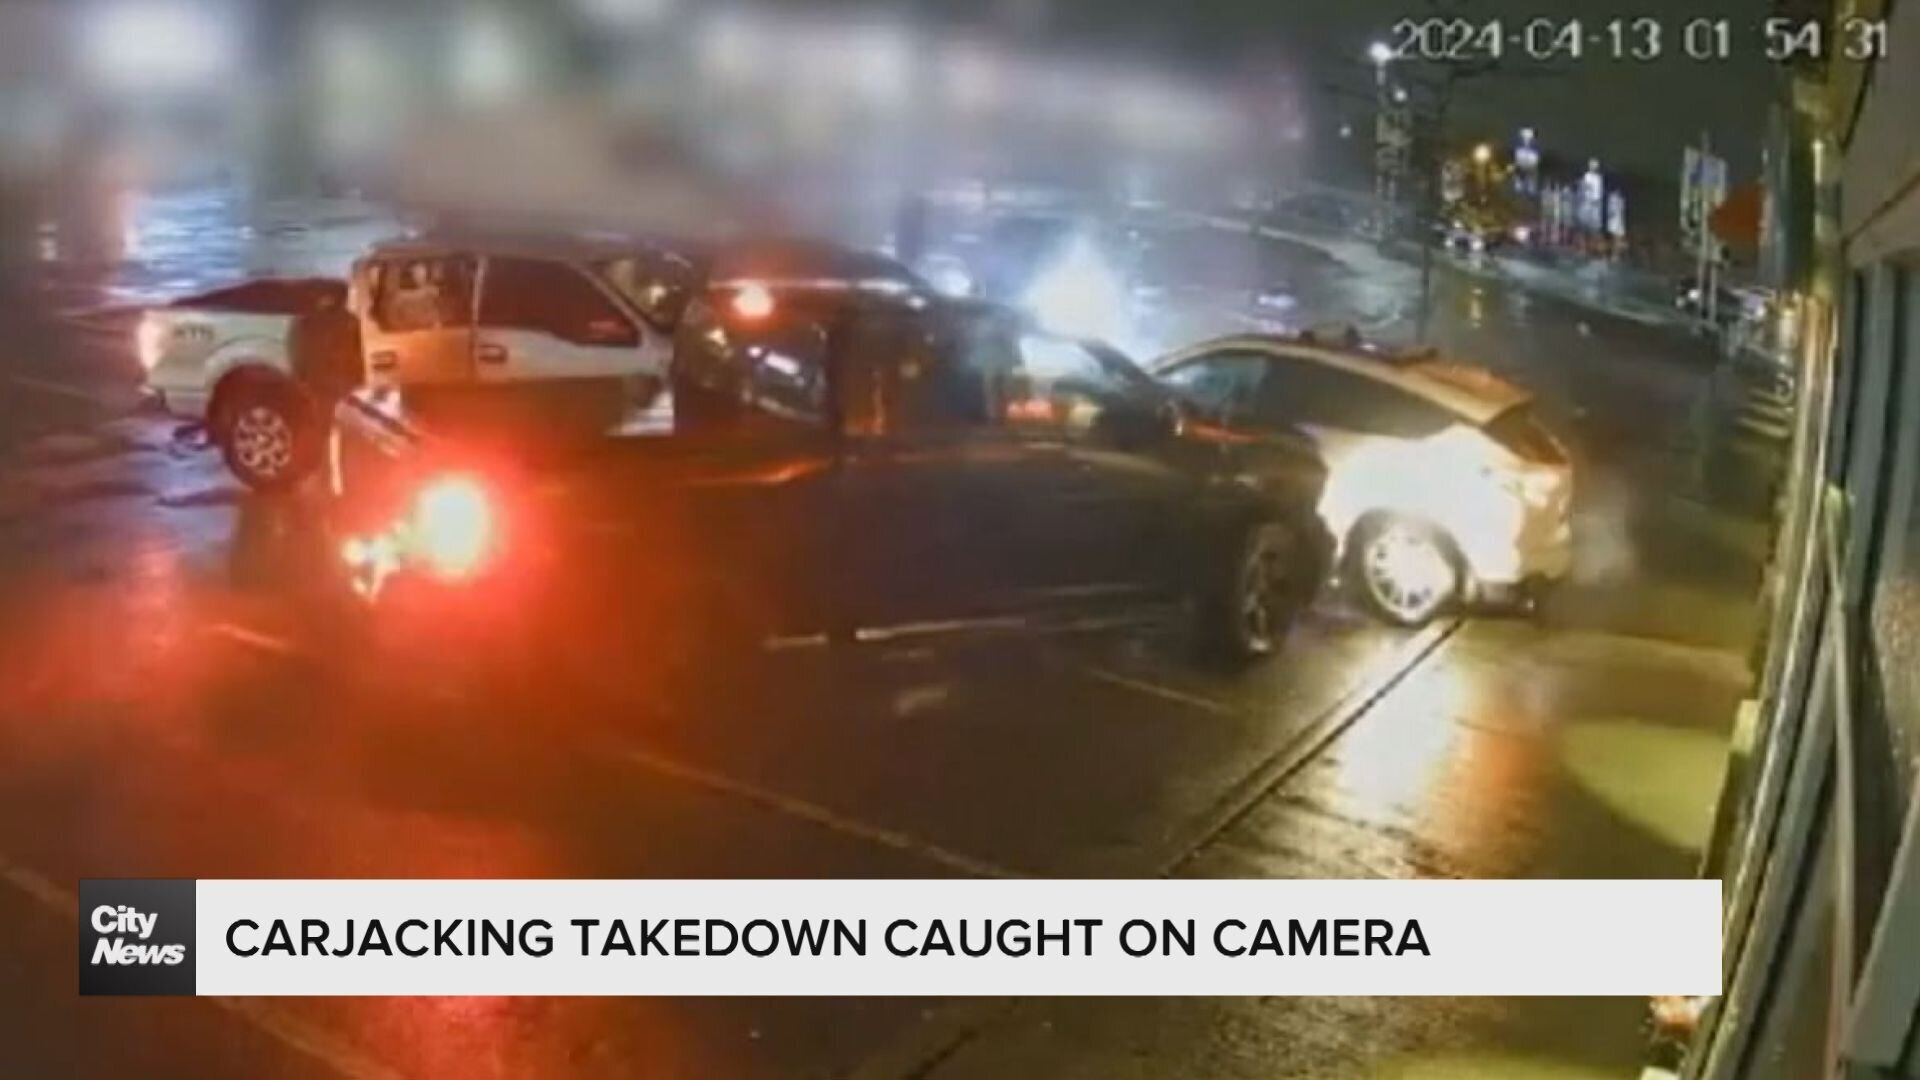 Carjacking suspects' dramatic takedown caught on camera